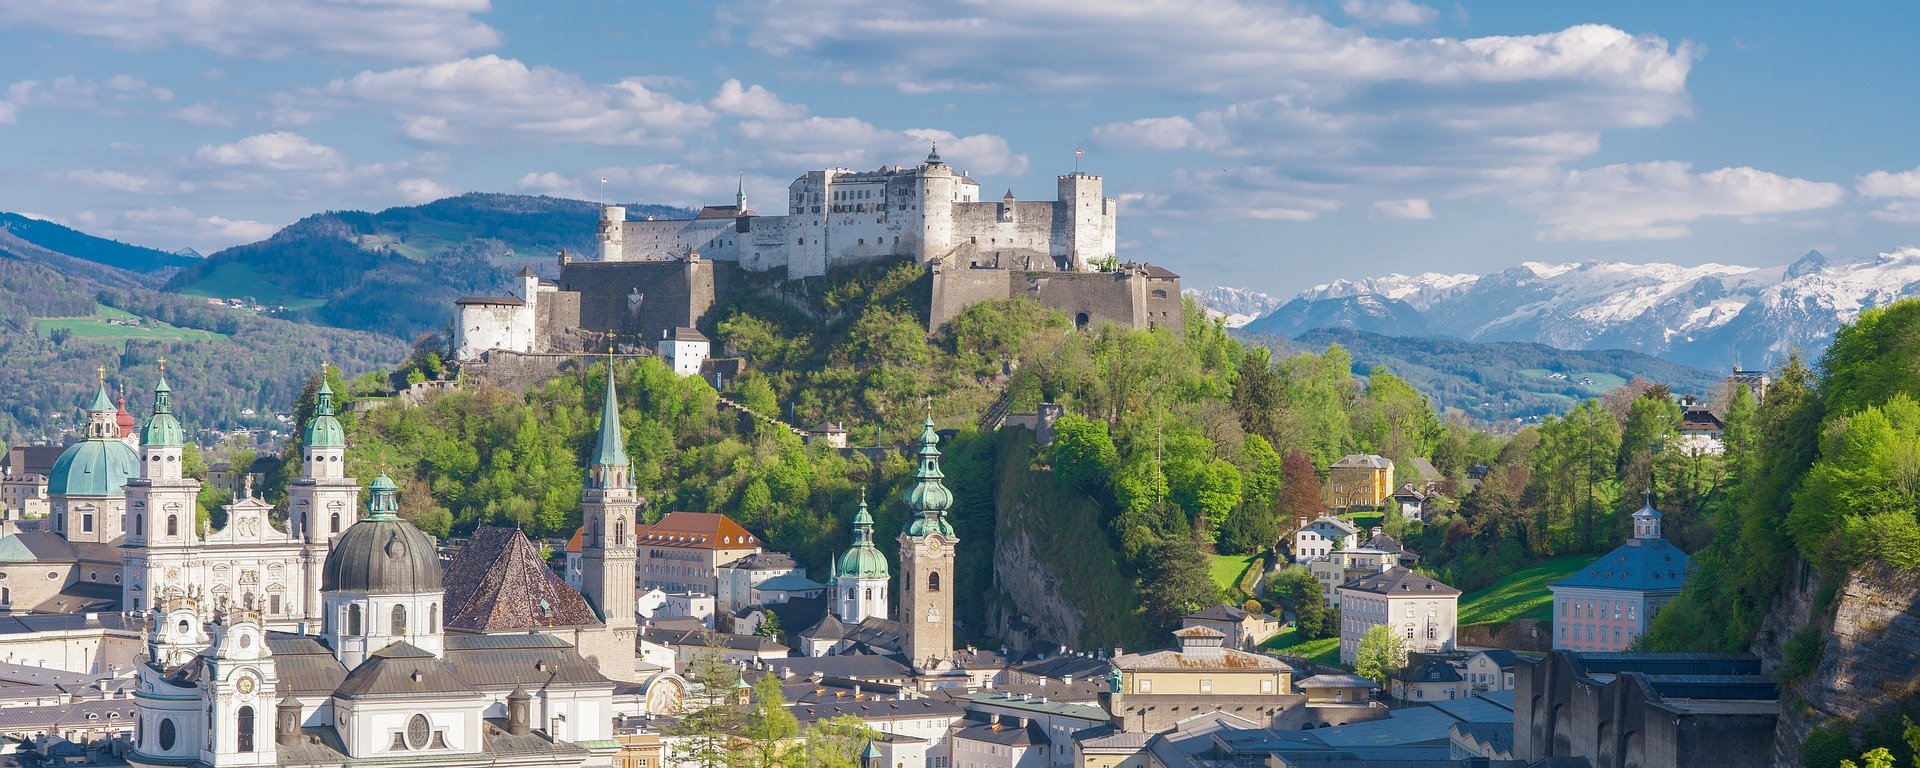 Salzburg | HausBauHaus Immobilien